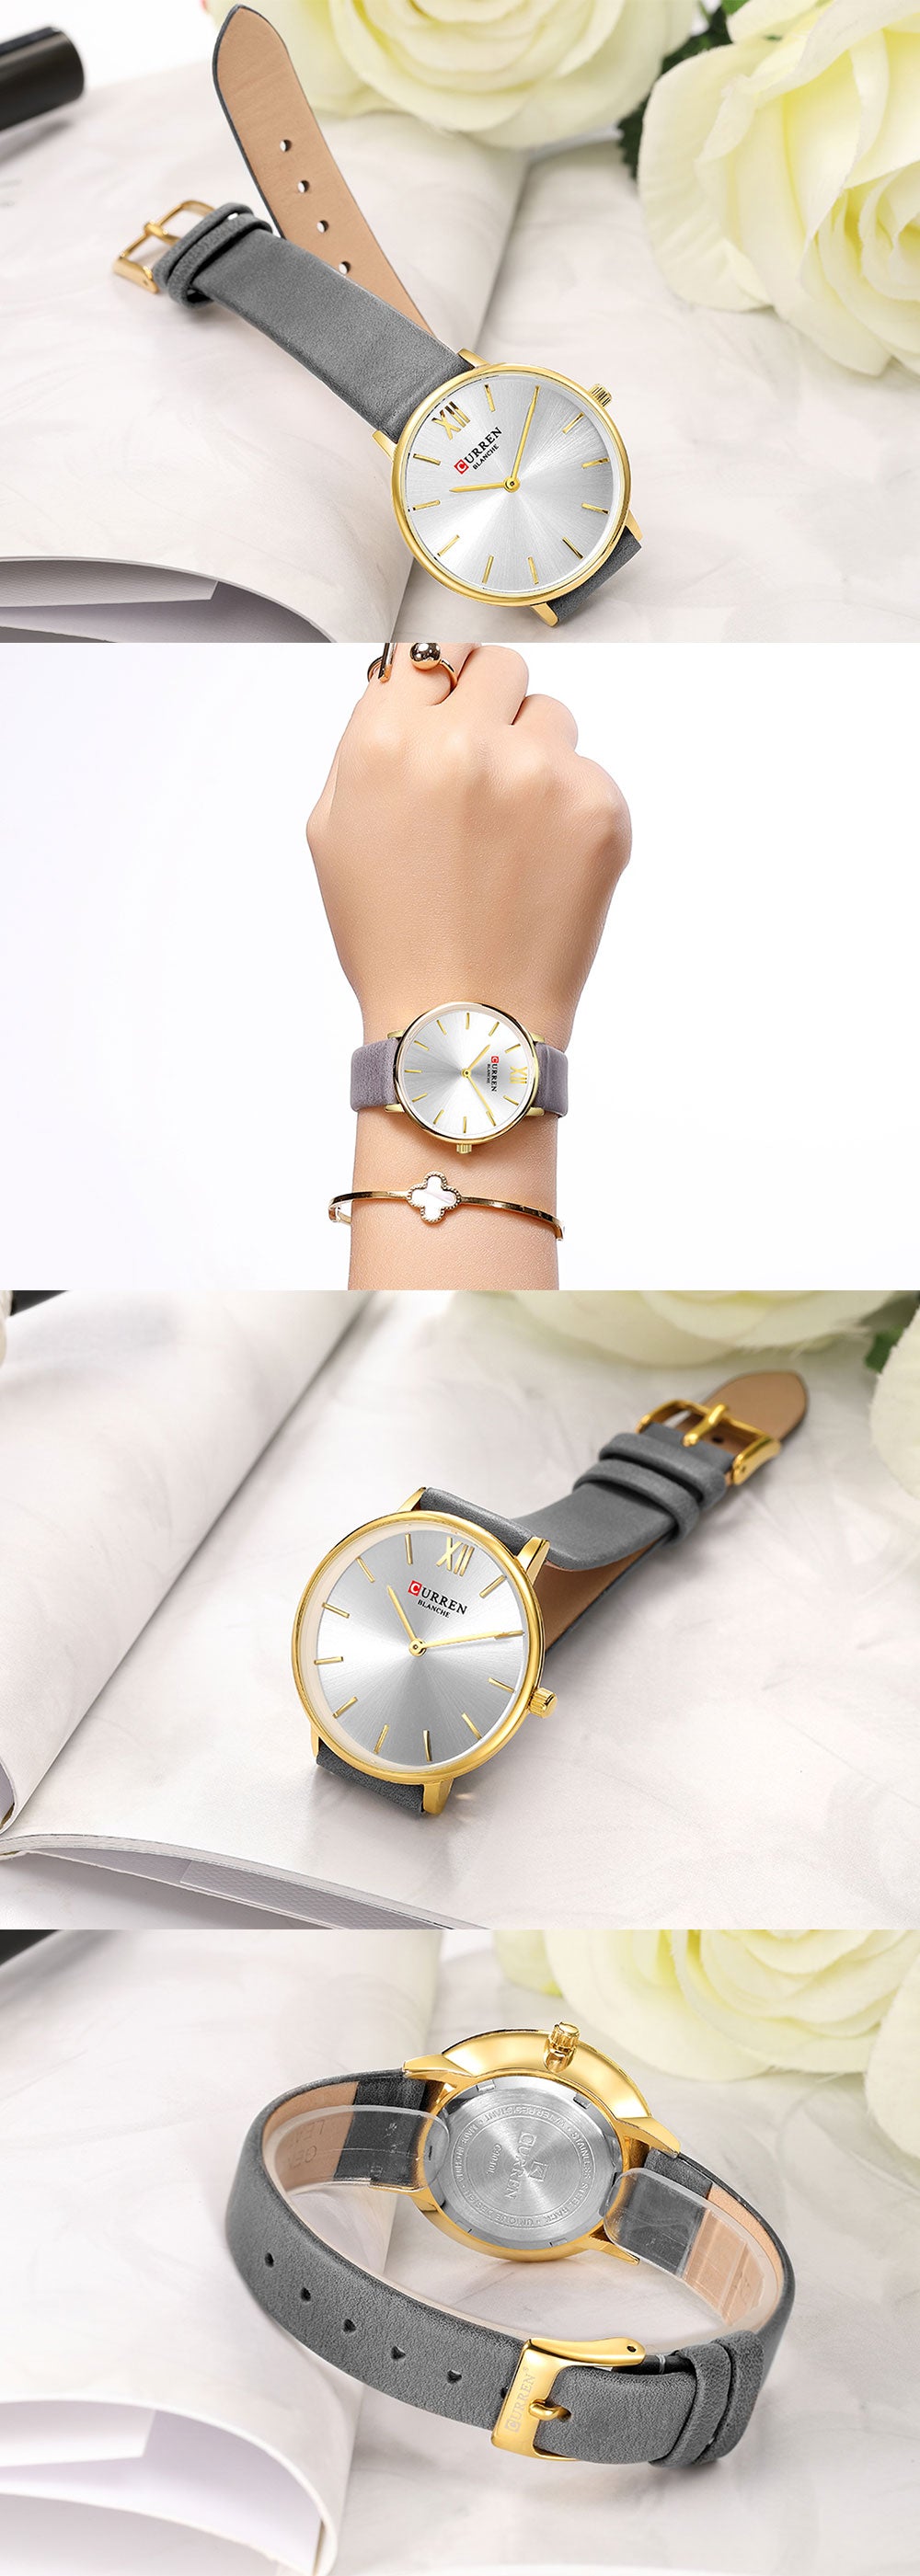 YSYH Women Watches Pink Analog Quartz Clock Female Casual Ladies Wrist Watch Soft Leather Strap Watch relogios feminino